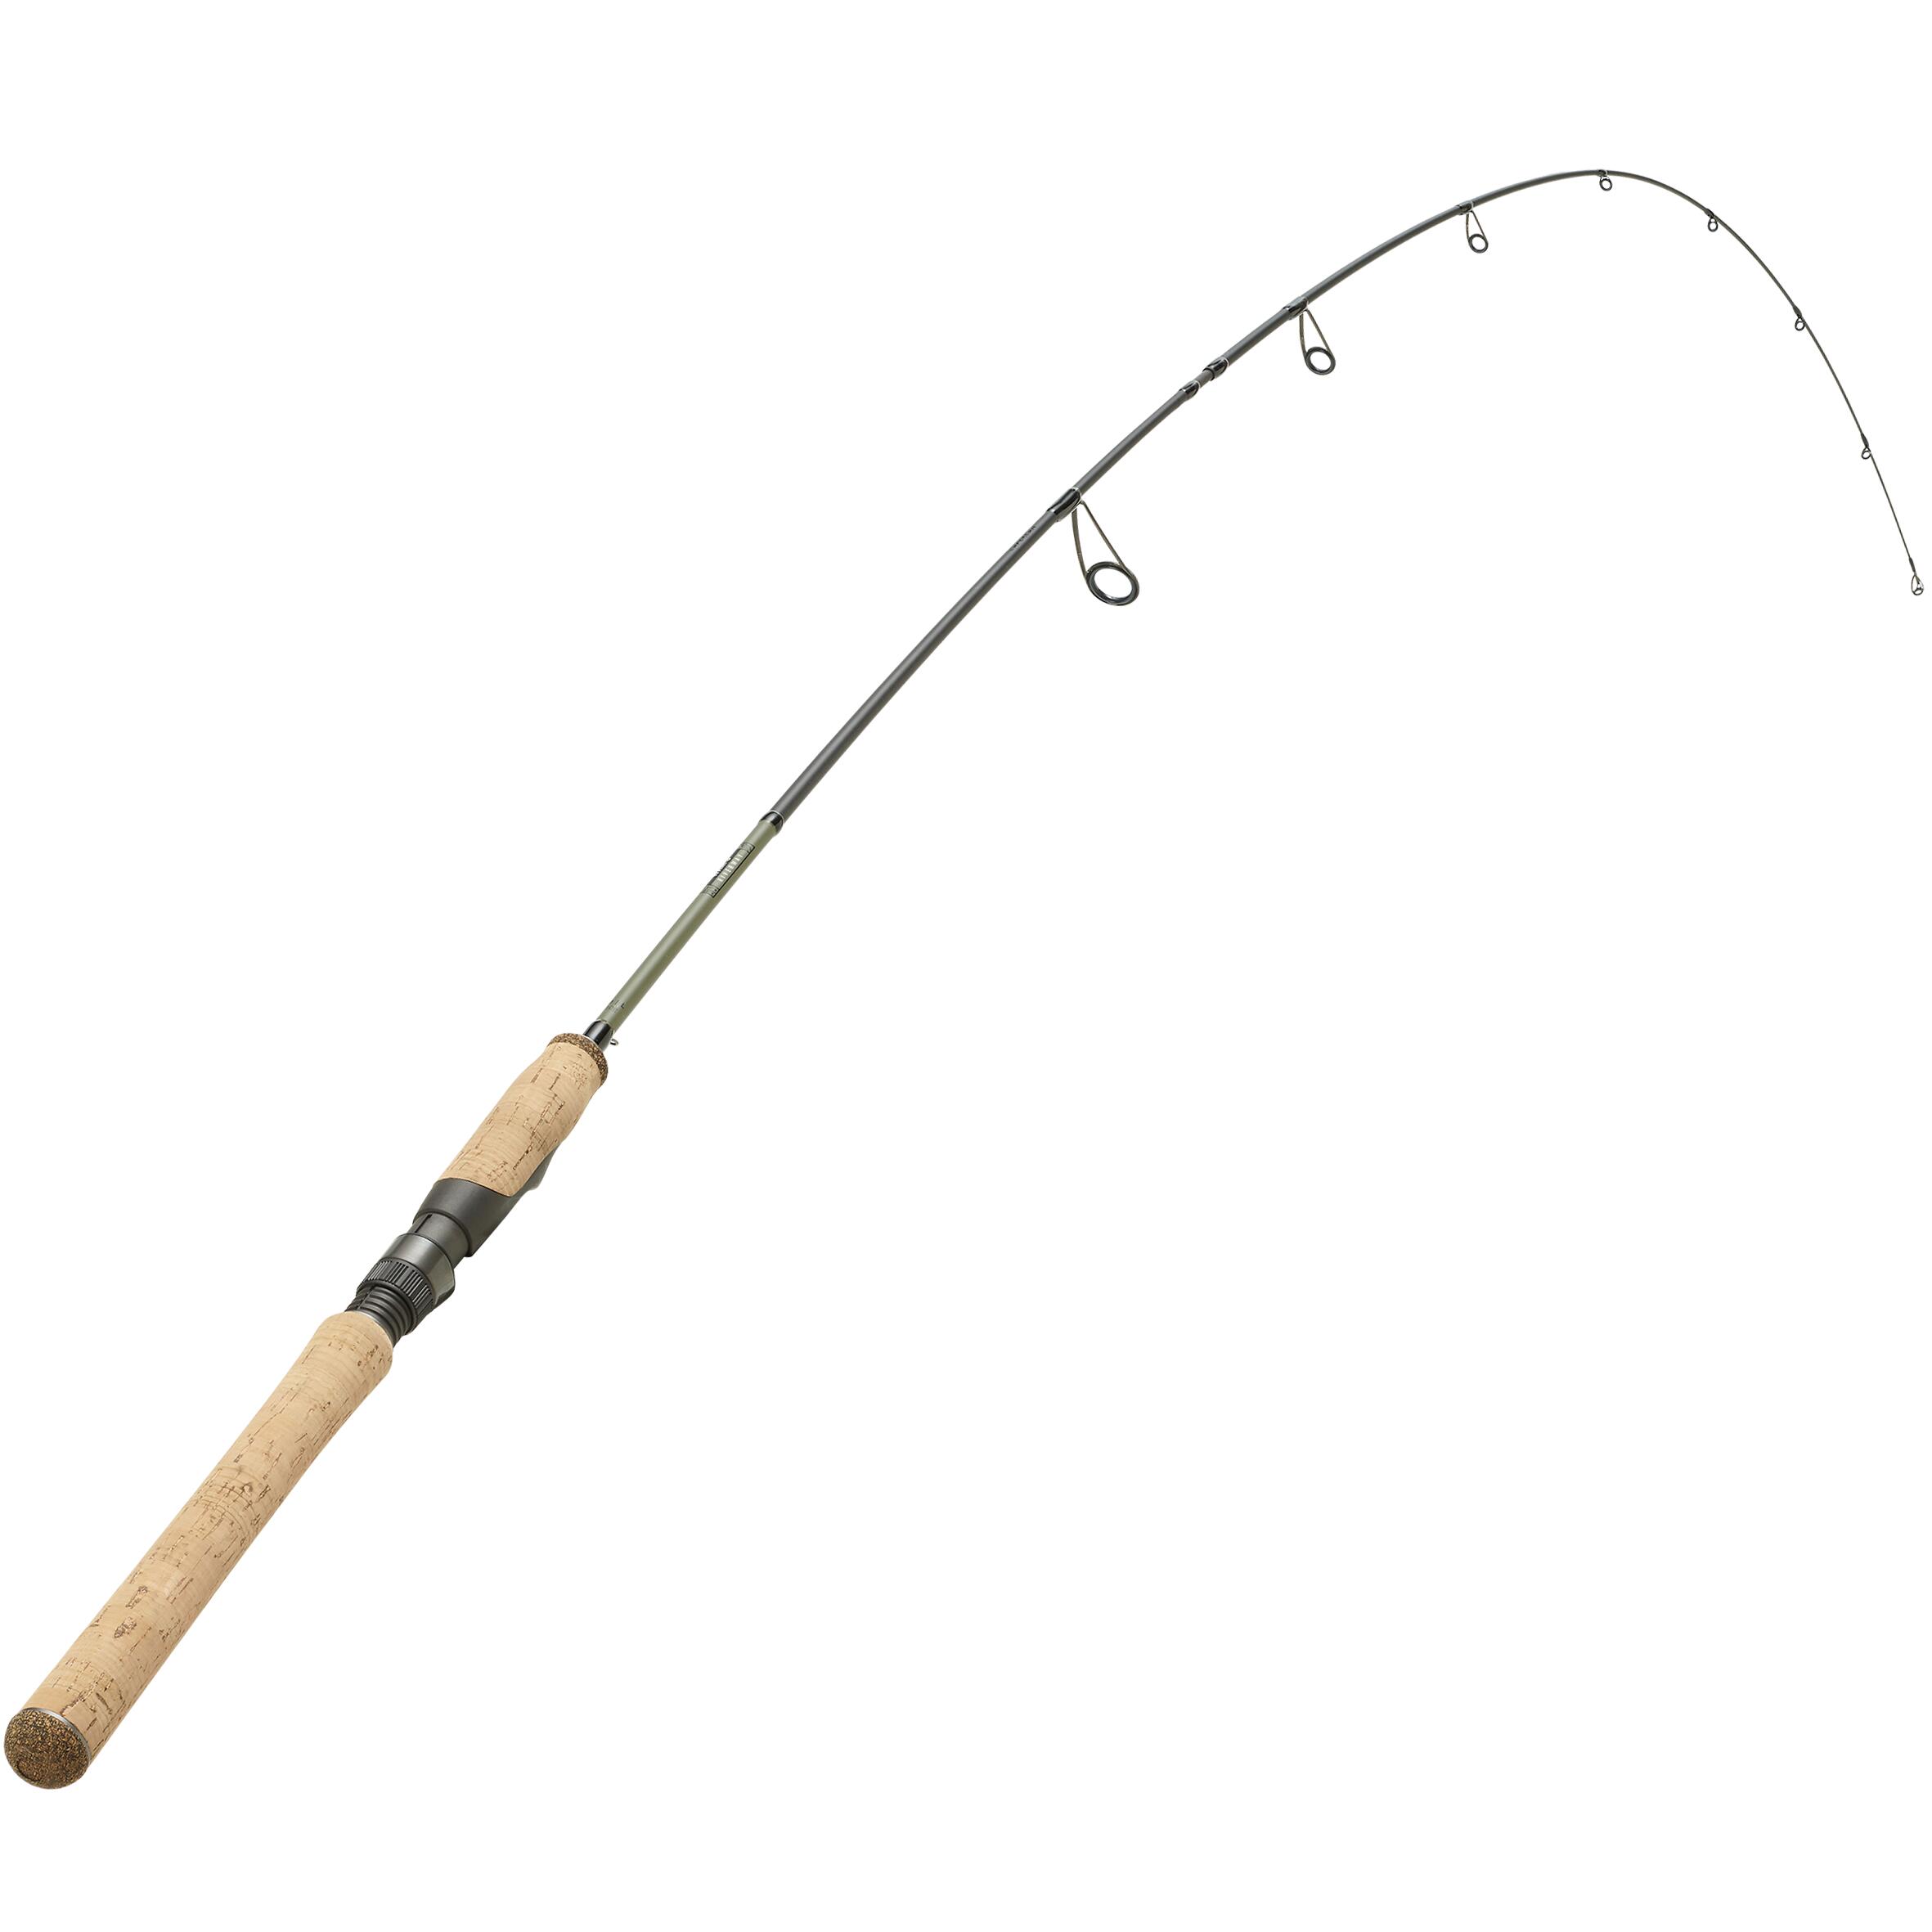 LURE FISHING ROD WXM-5 180 M 2/11